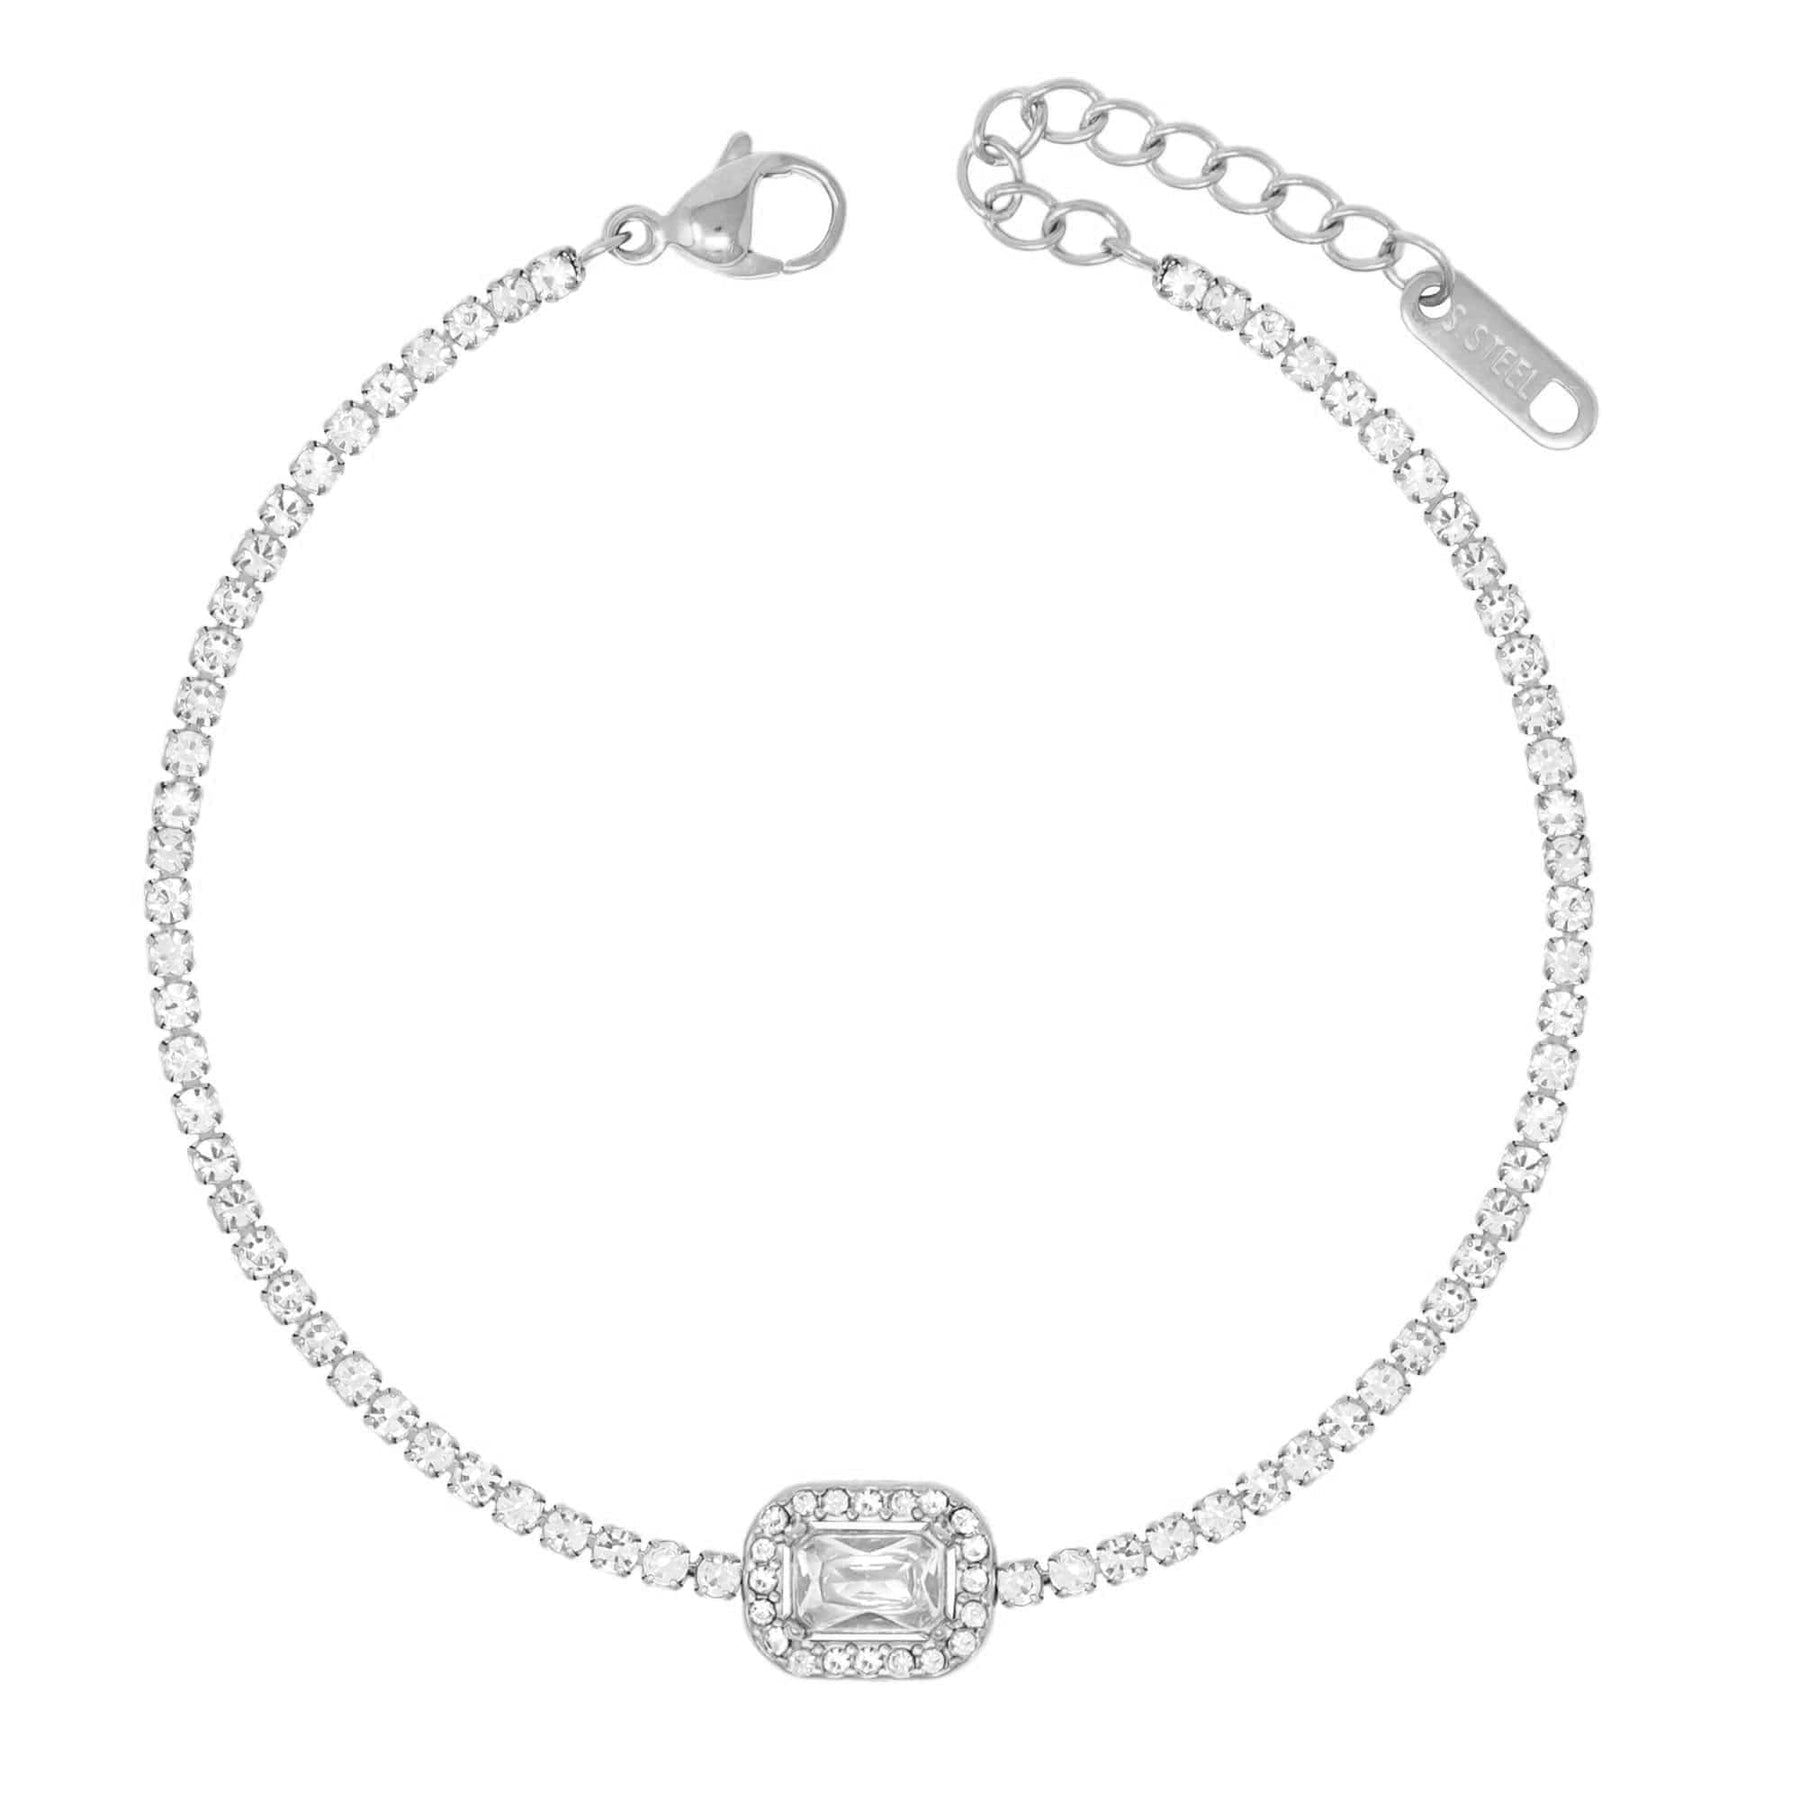 BohoMoon Stainless Steel Tranquil Bracelet Silver